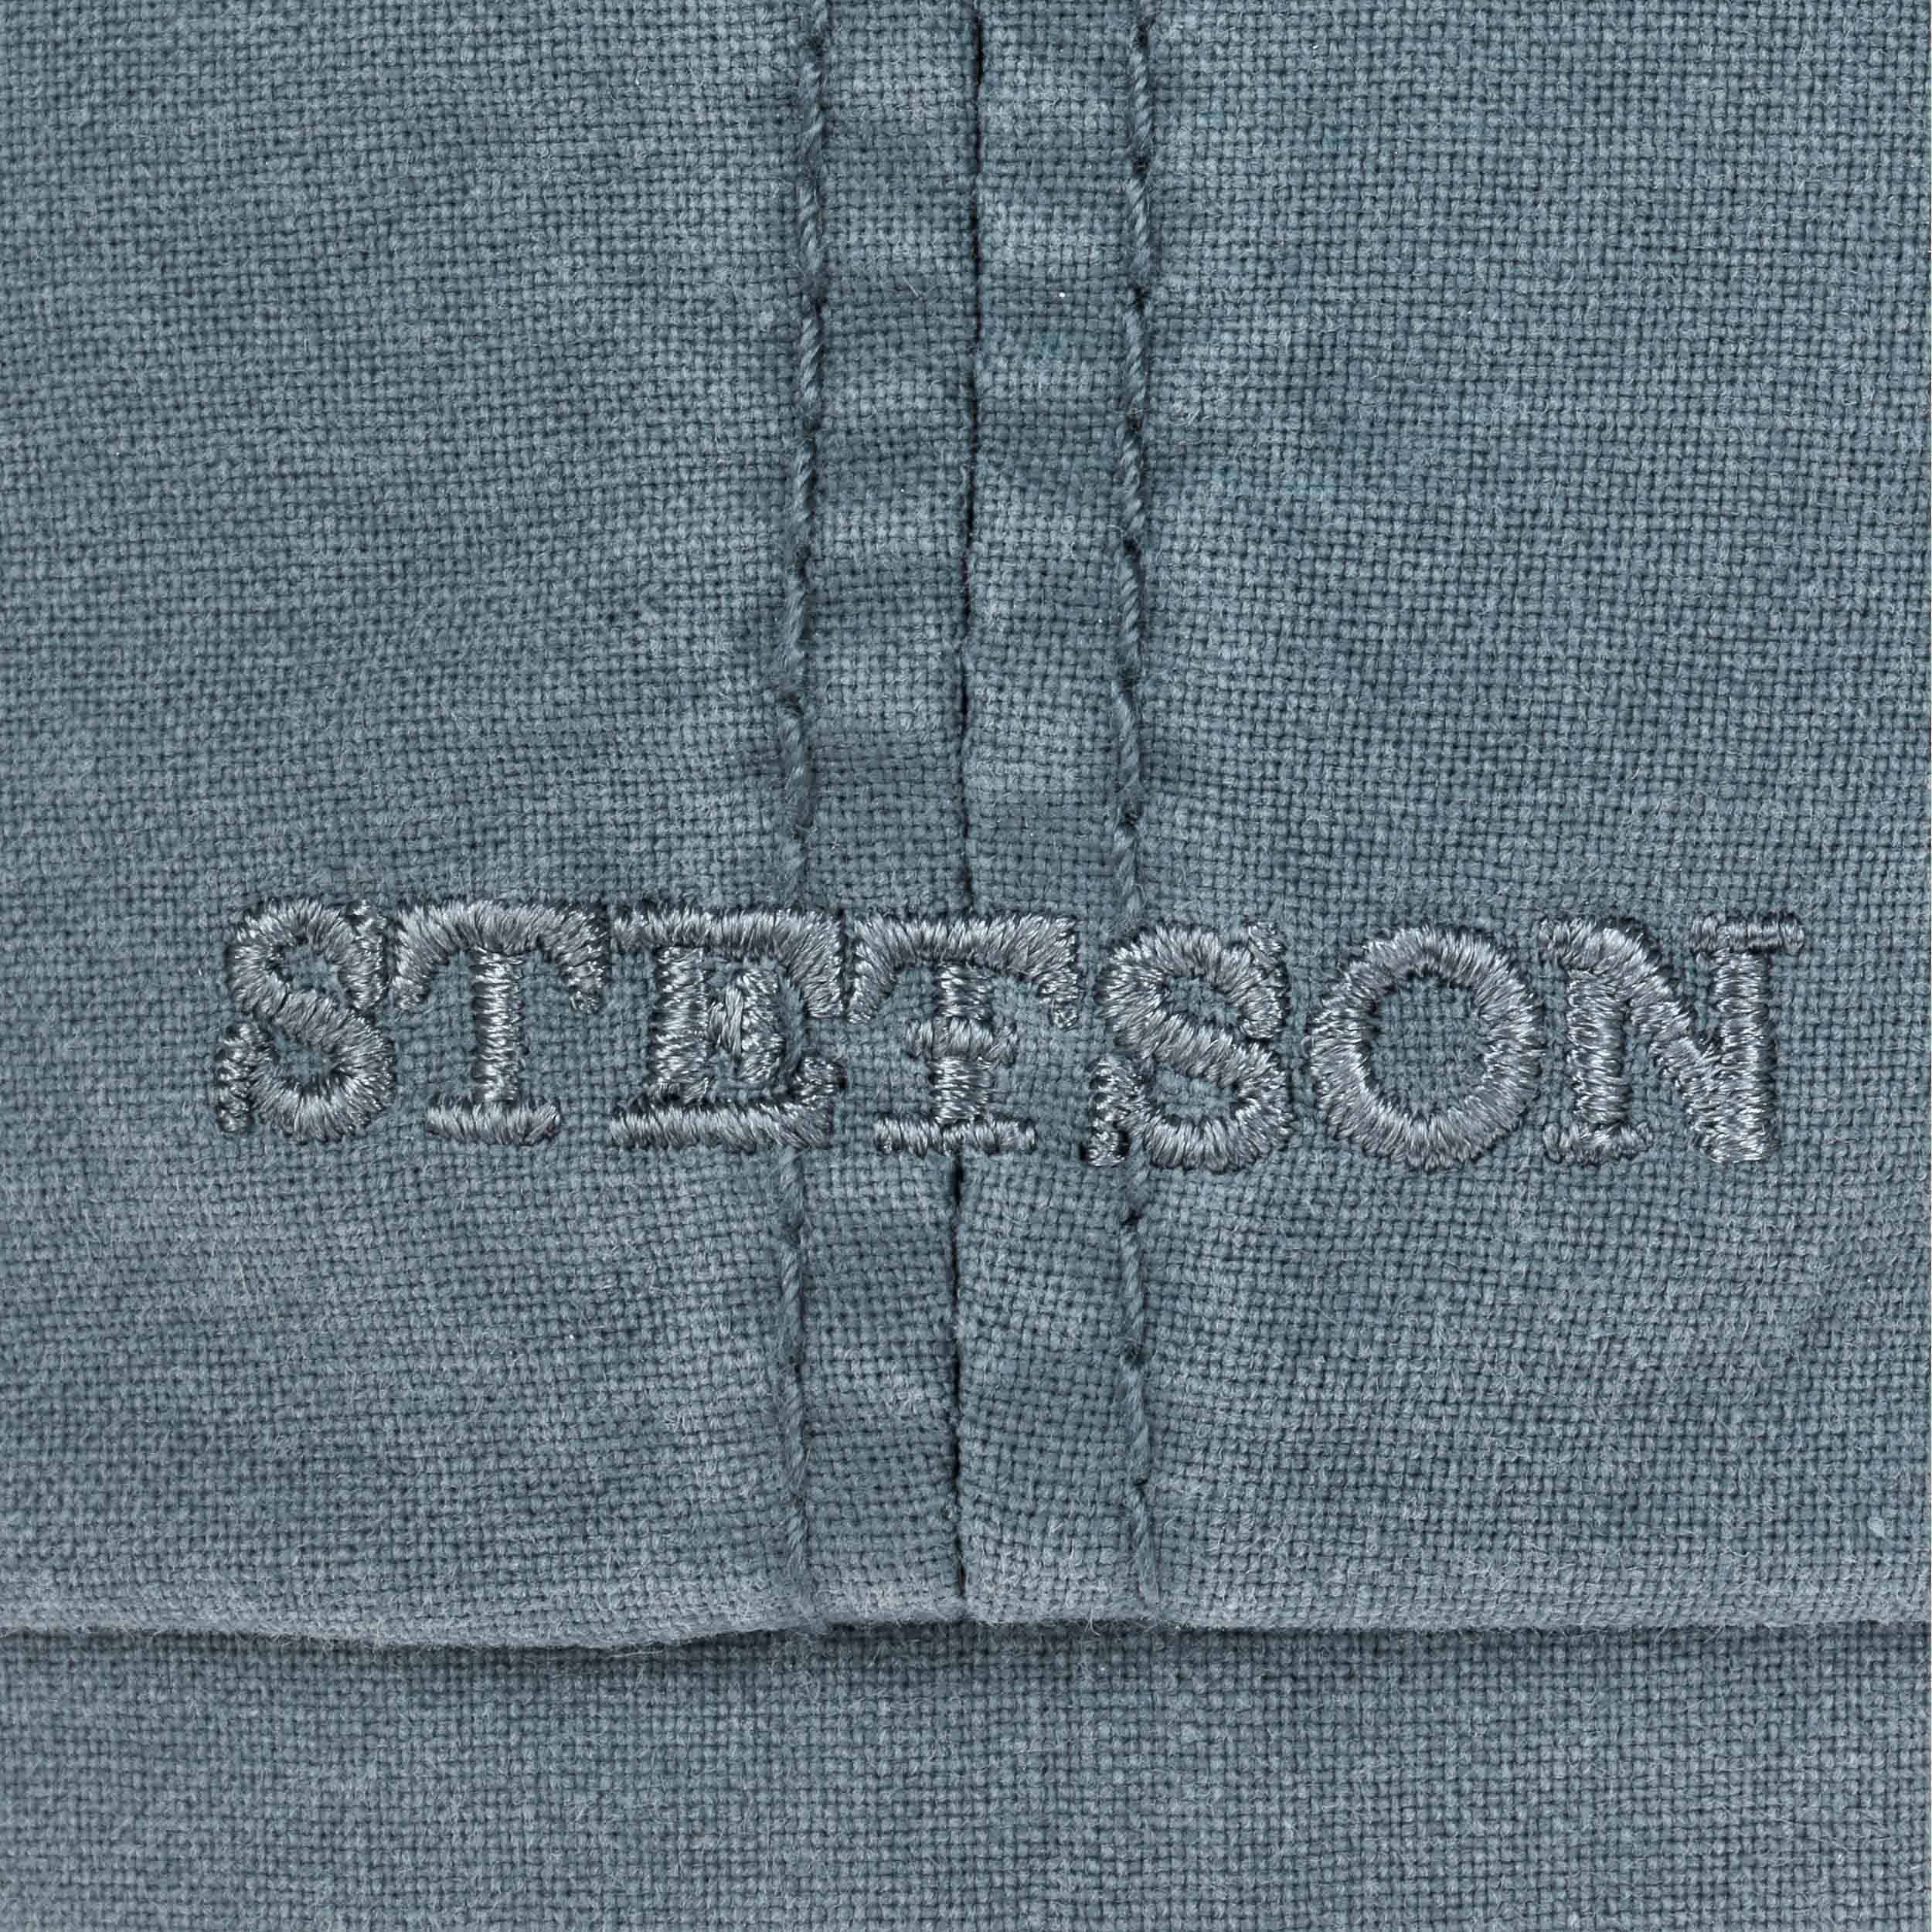 Hatteras Cotton Cap by Stetson - 79,00